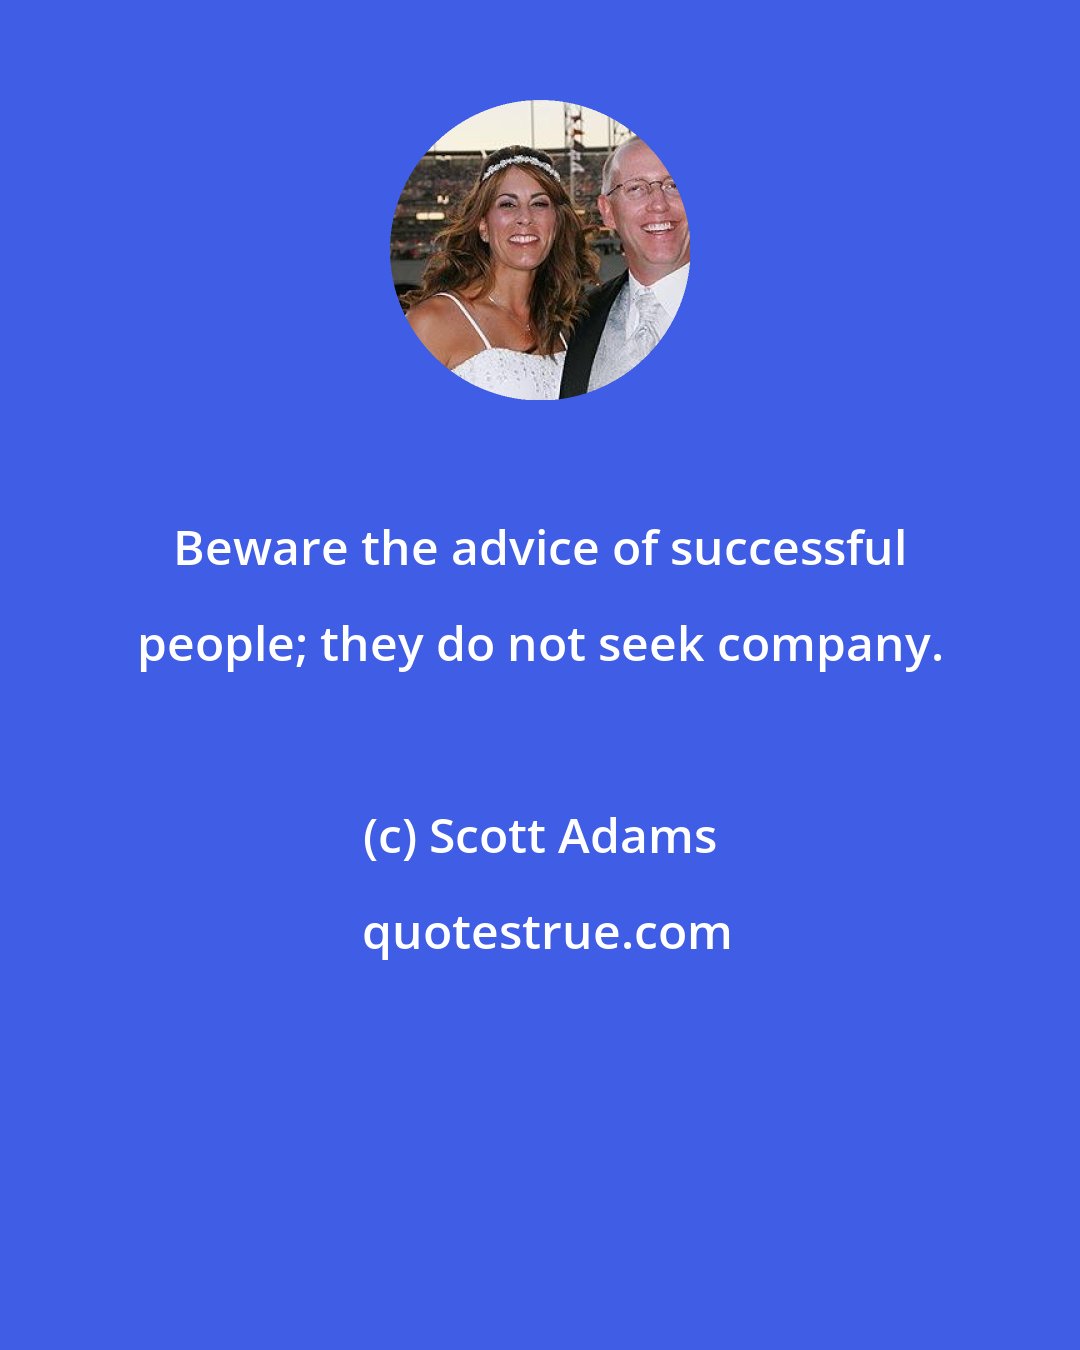 Scott Adams: Beware the advice of successful people; they do not seek company.